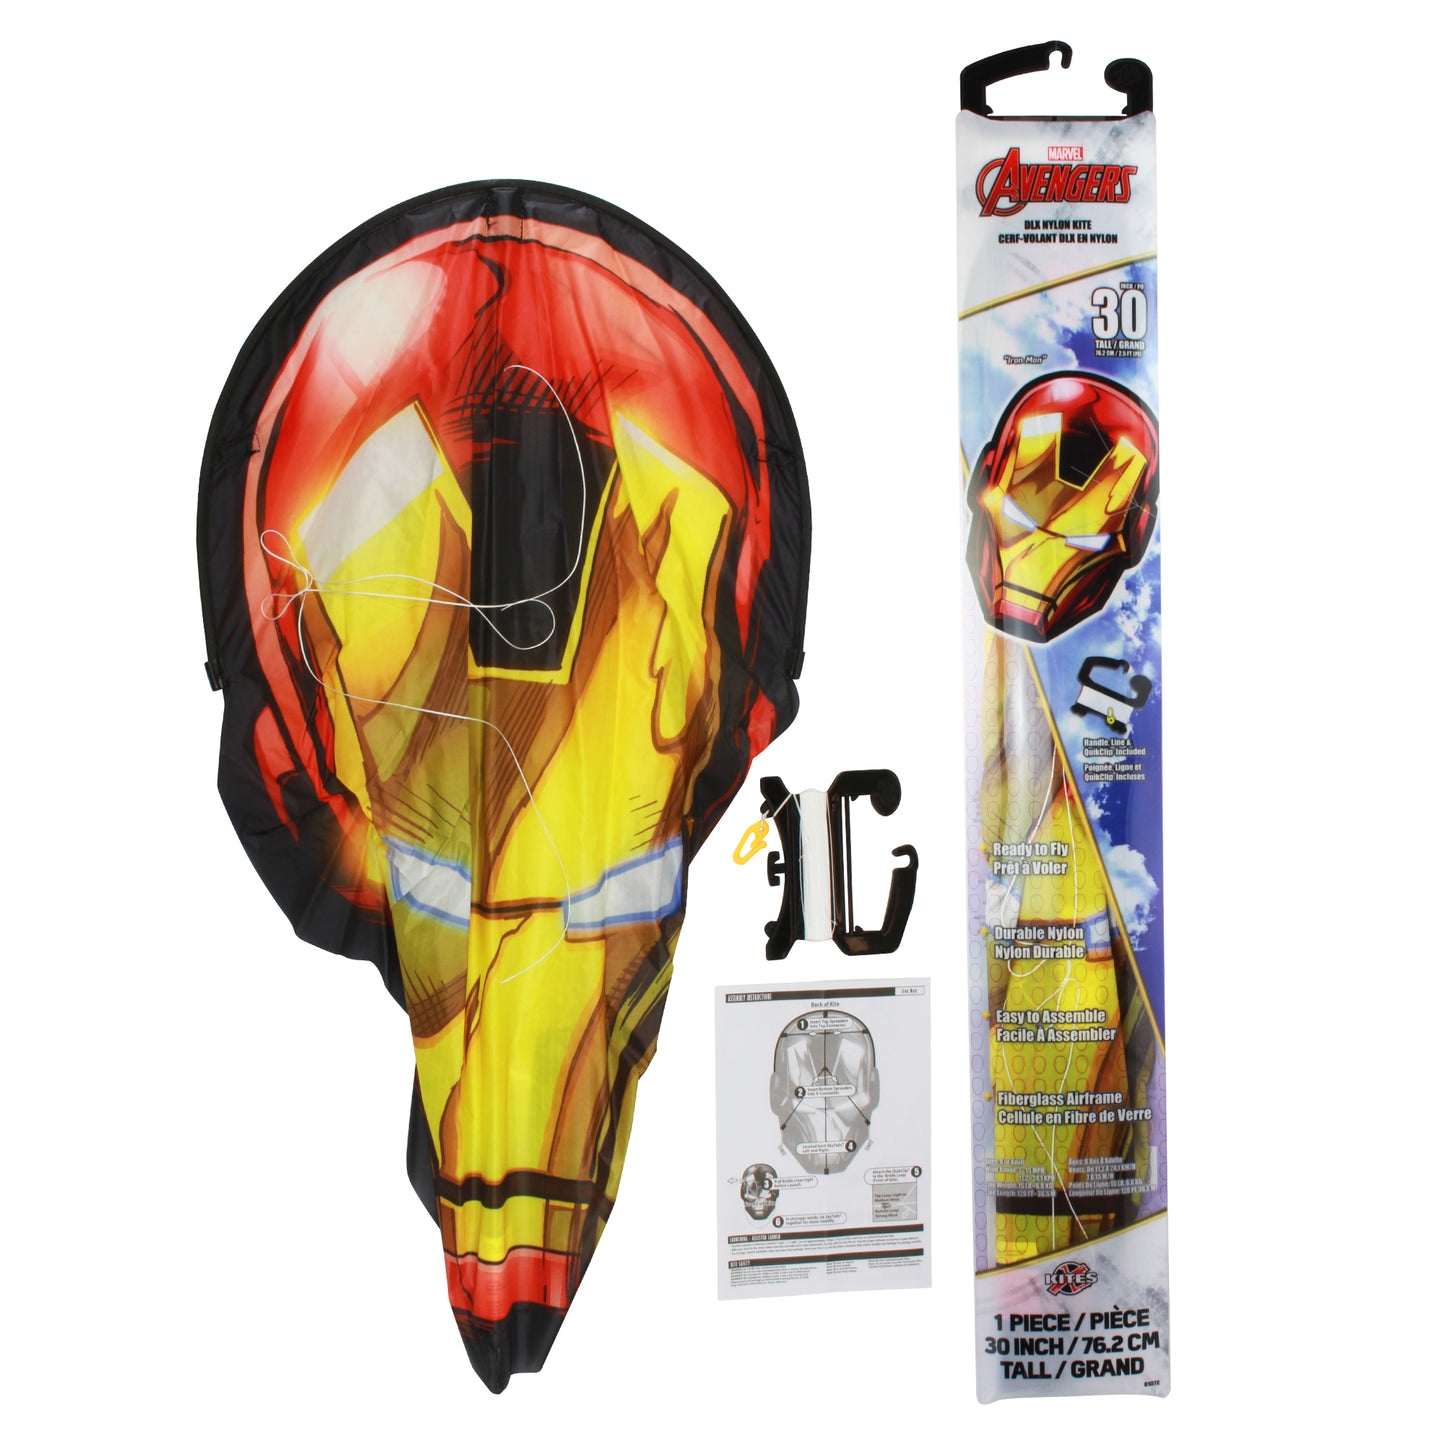 X Kites FaceKites Avengers Iron Man + X Kites SuperSled Avengers Iron Man Nylon Kite Bundle packaging and contents